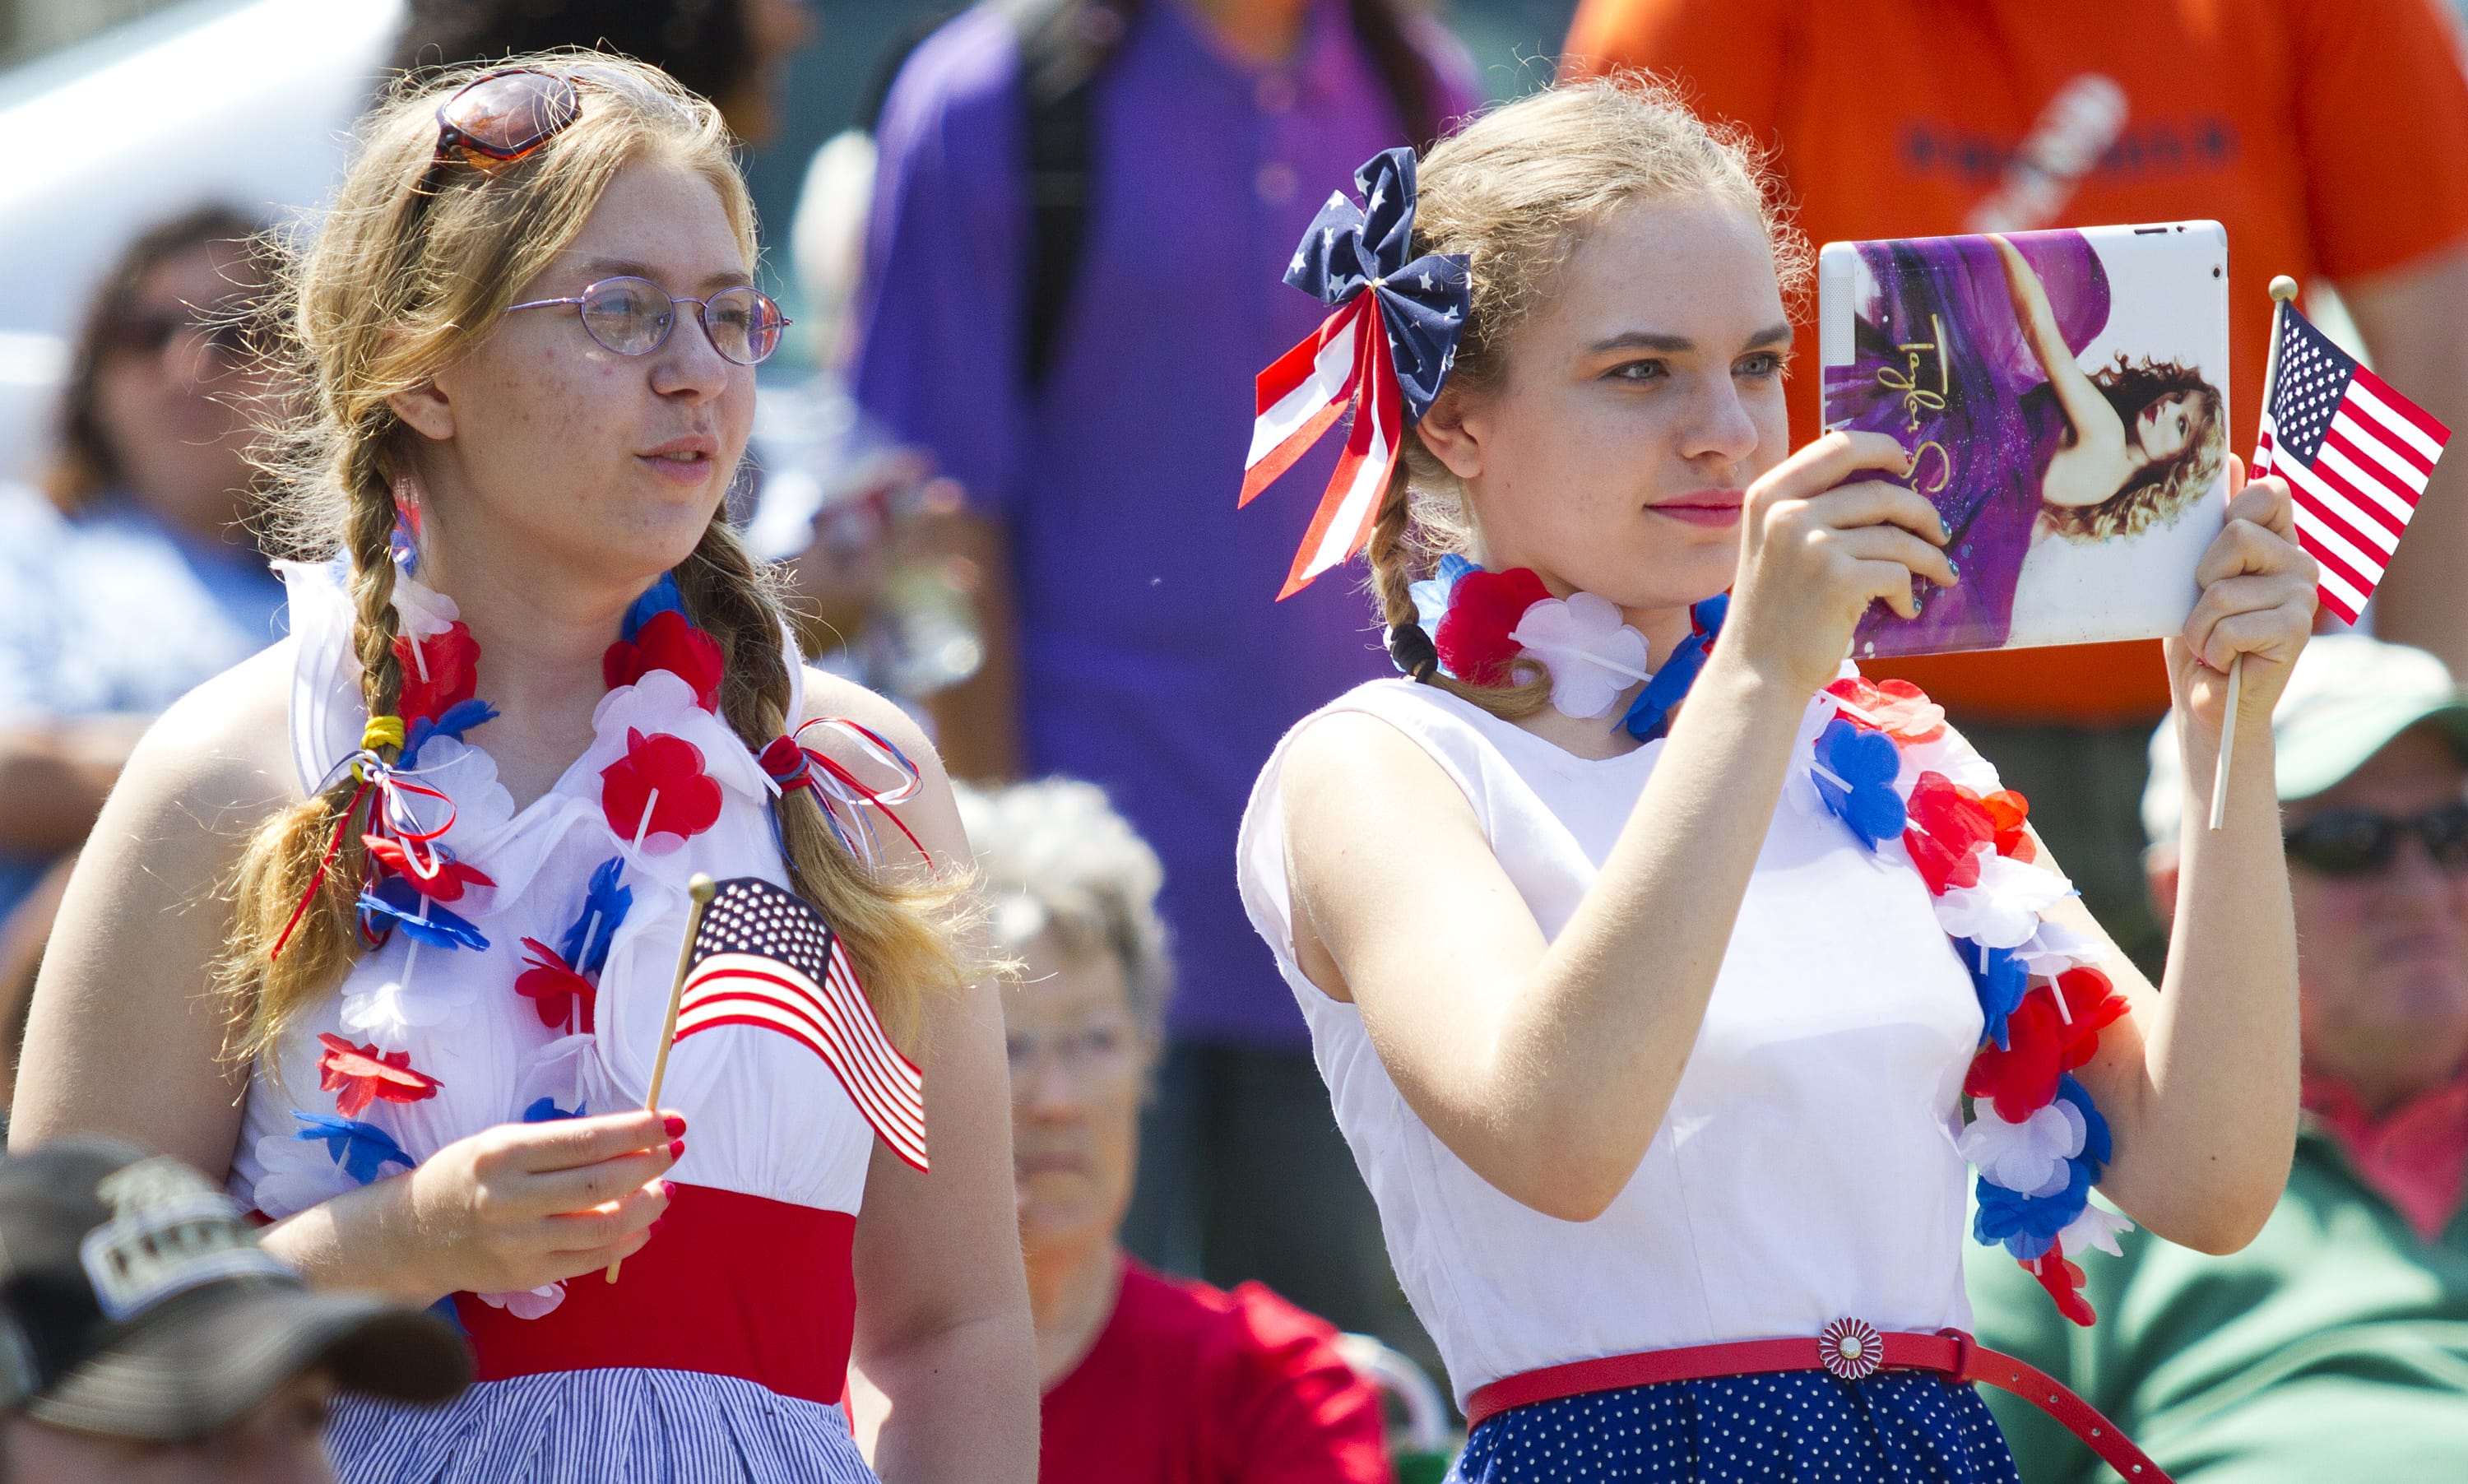 Abby Storm, 14, waves her flag as Rachel Storm, 17, photographs the parade.